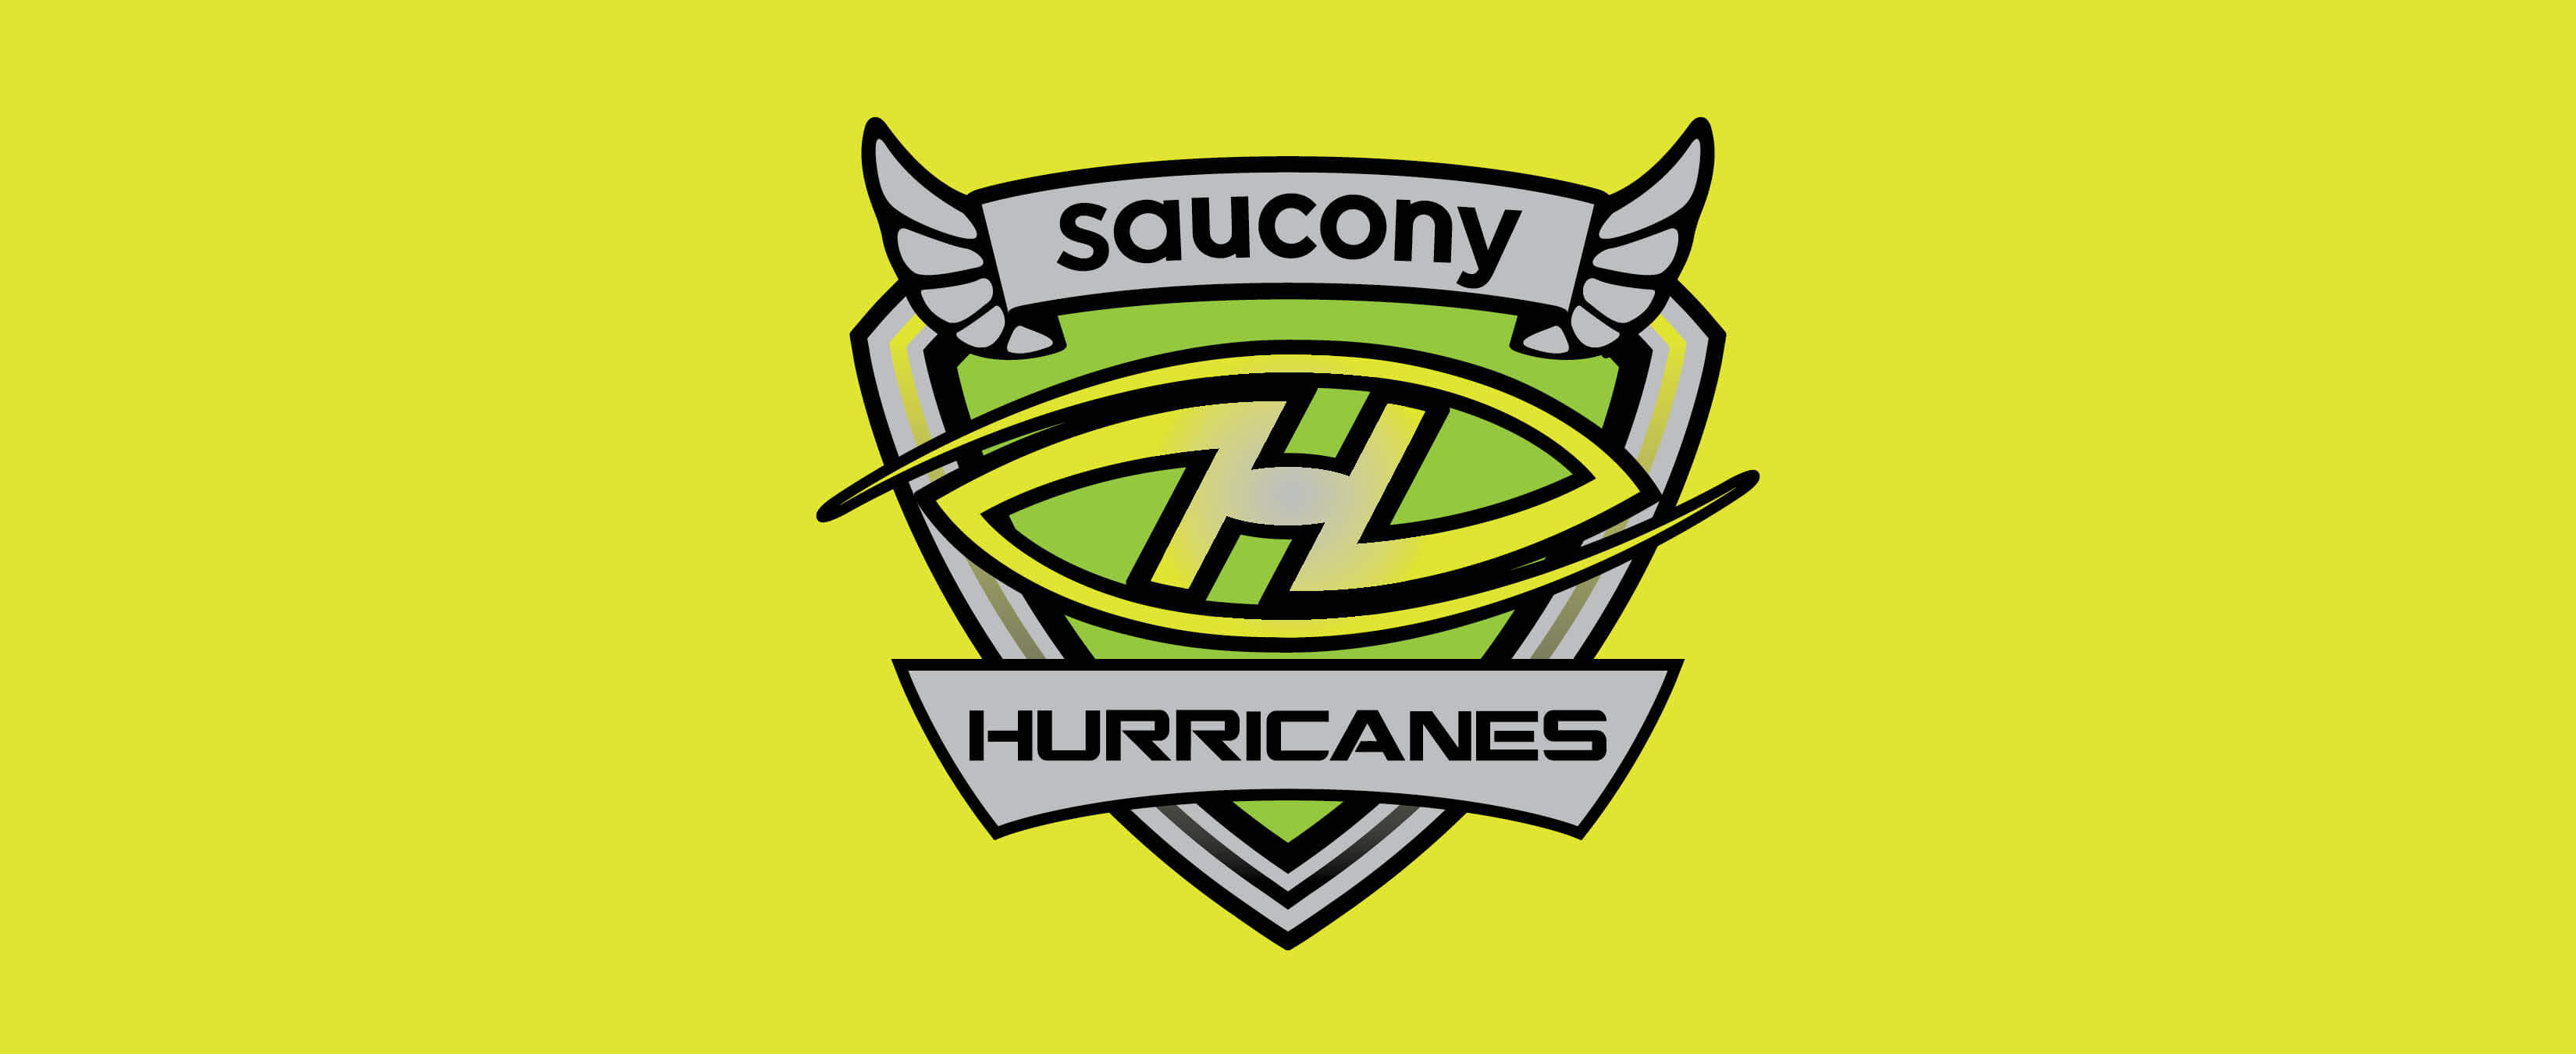 saucony hurricane application 2018